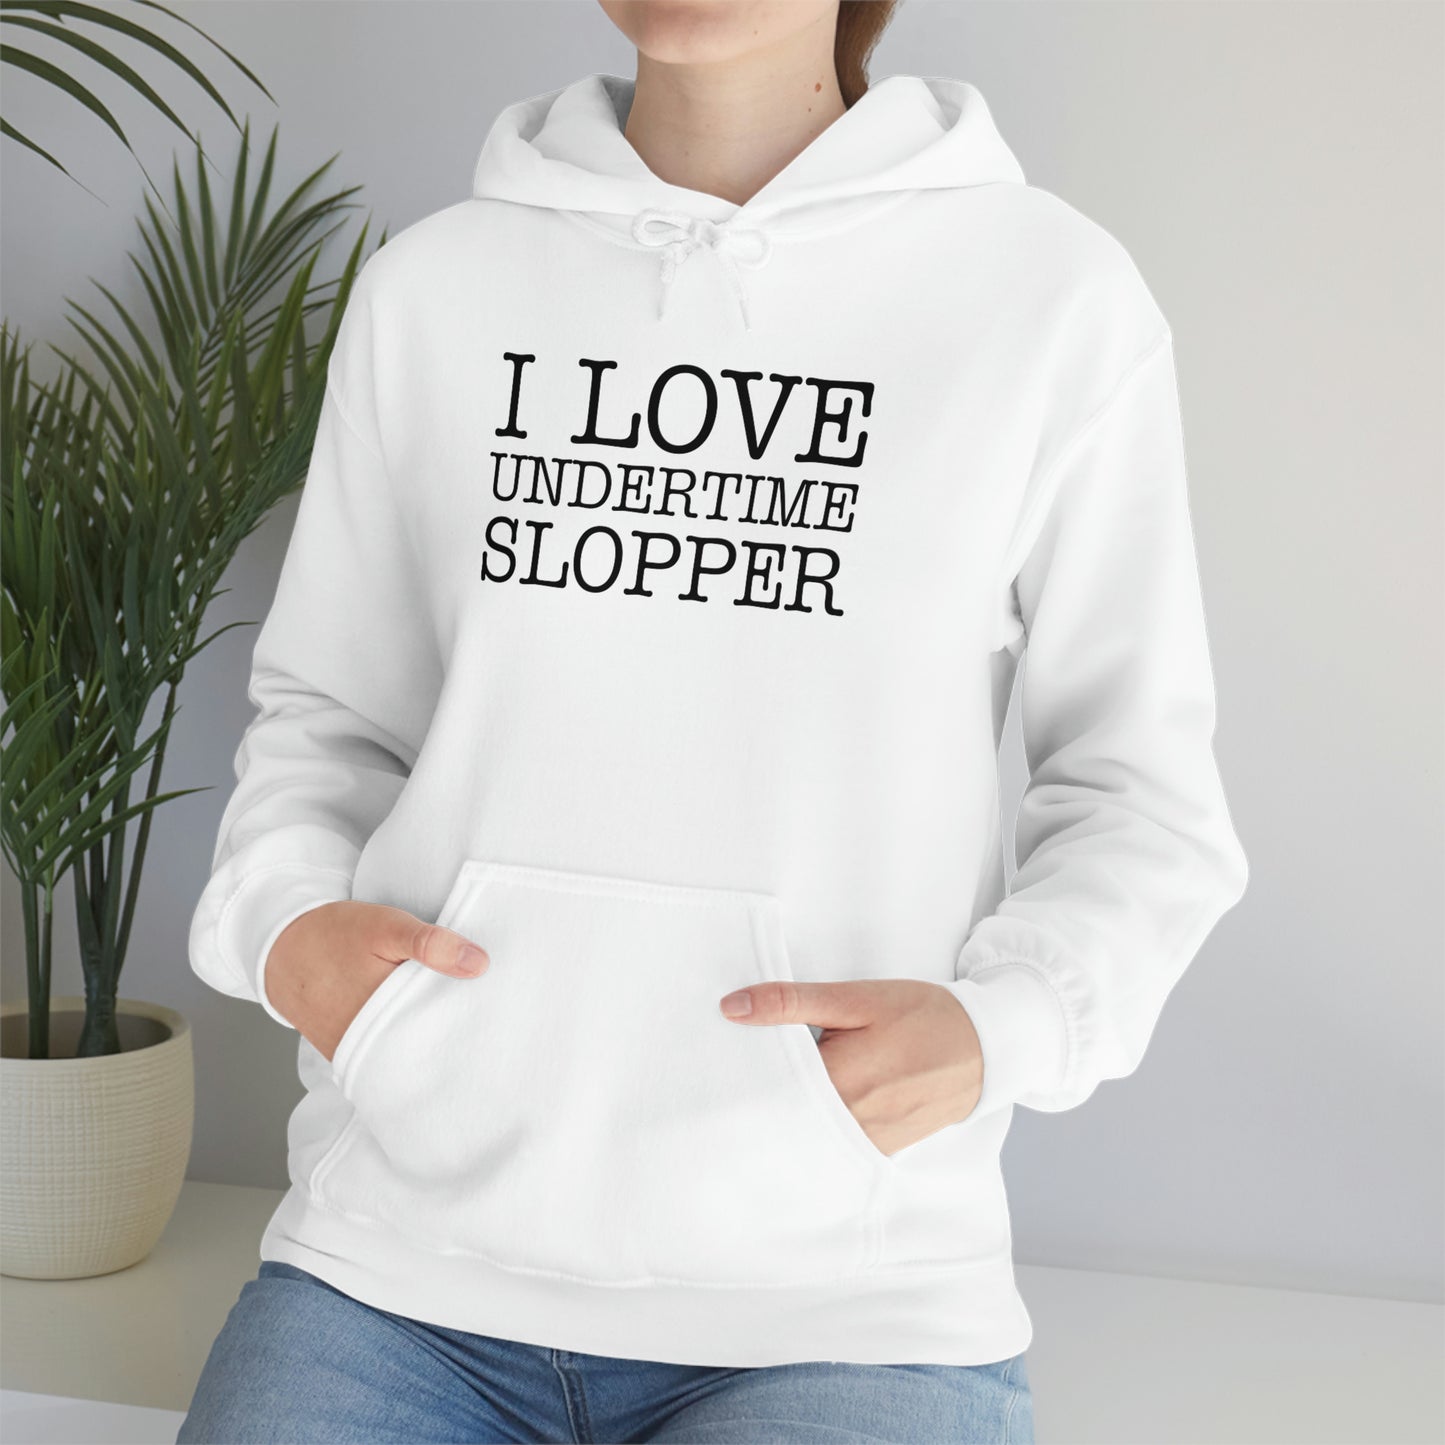 I love Undertime Slopper (Black Text) Hoodie | Official Undertime Slopper Hoodie